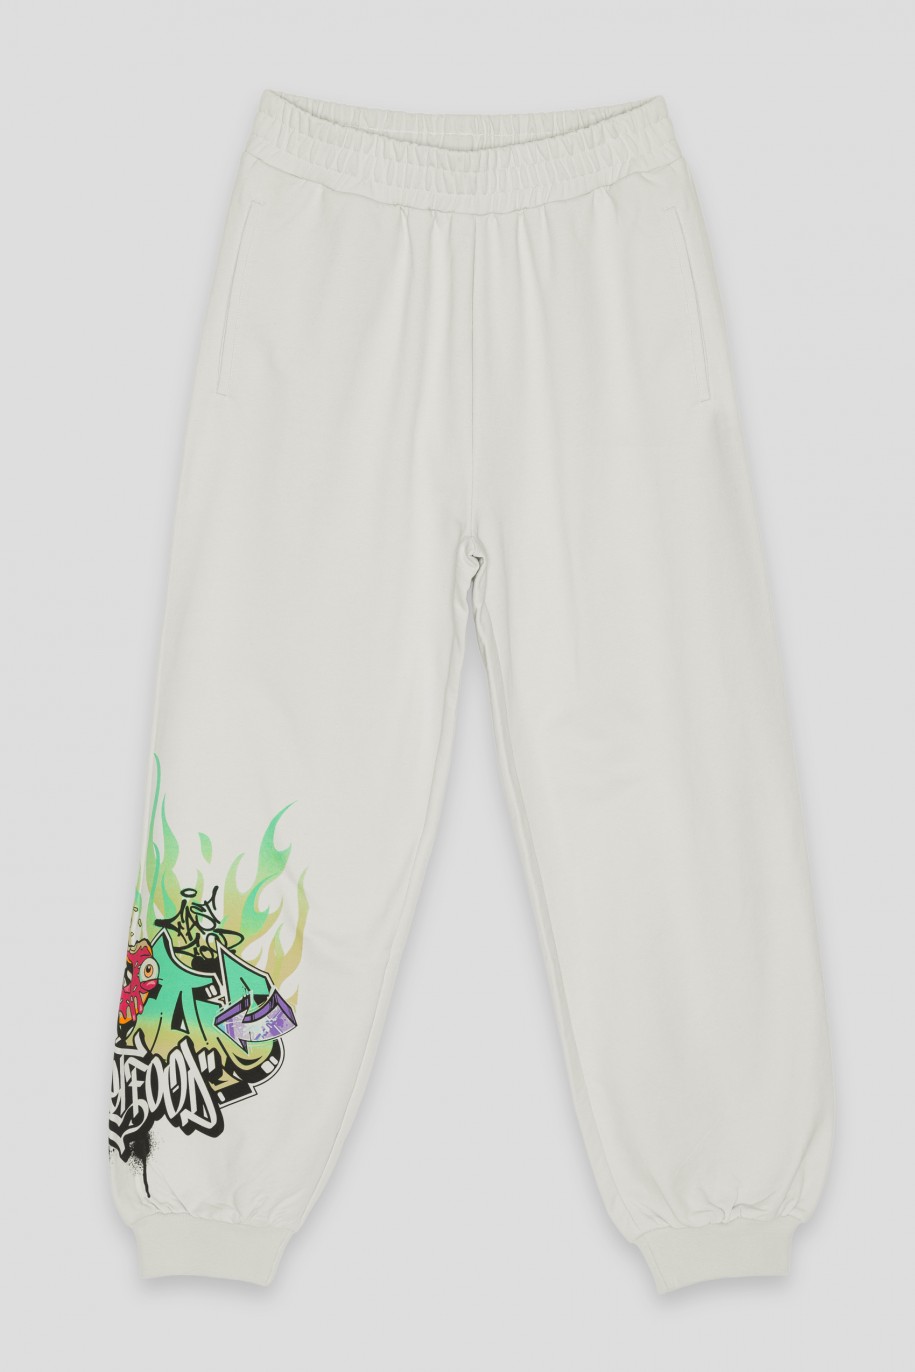 Kremowe spodnie z nadrukiem graffiti - 43060